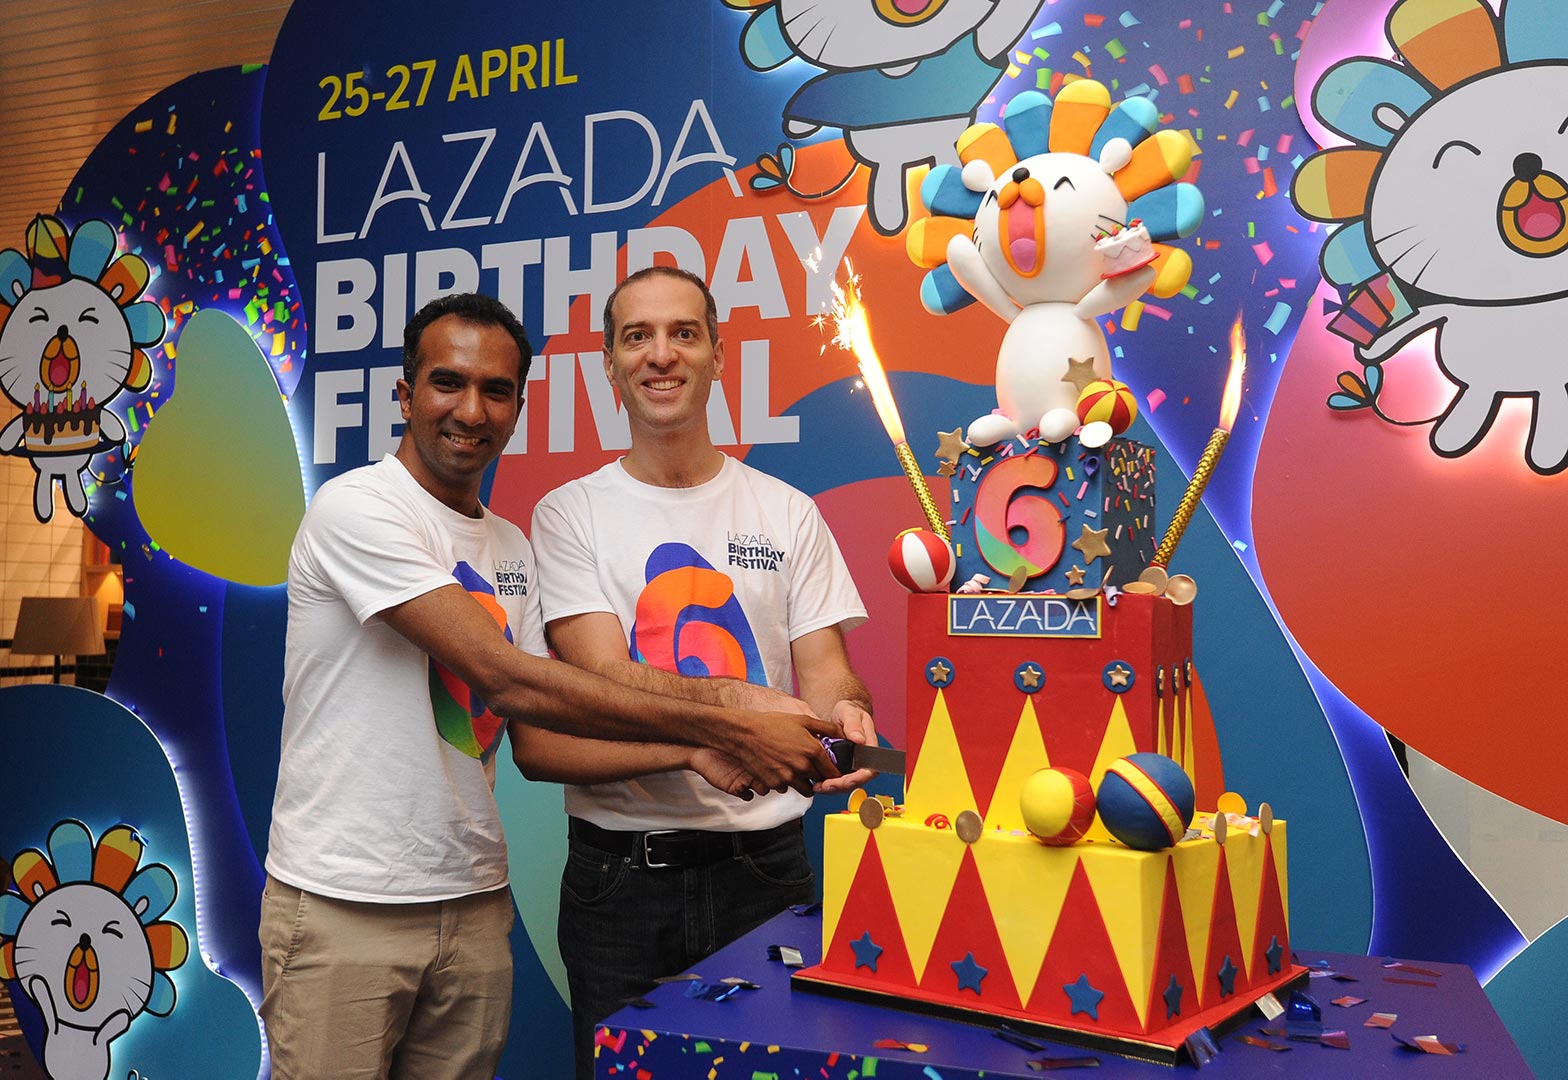 Lazada 6 Birthday Festival